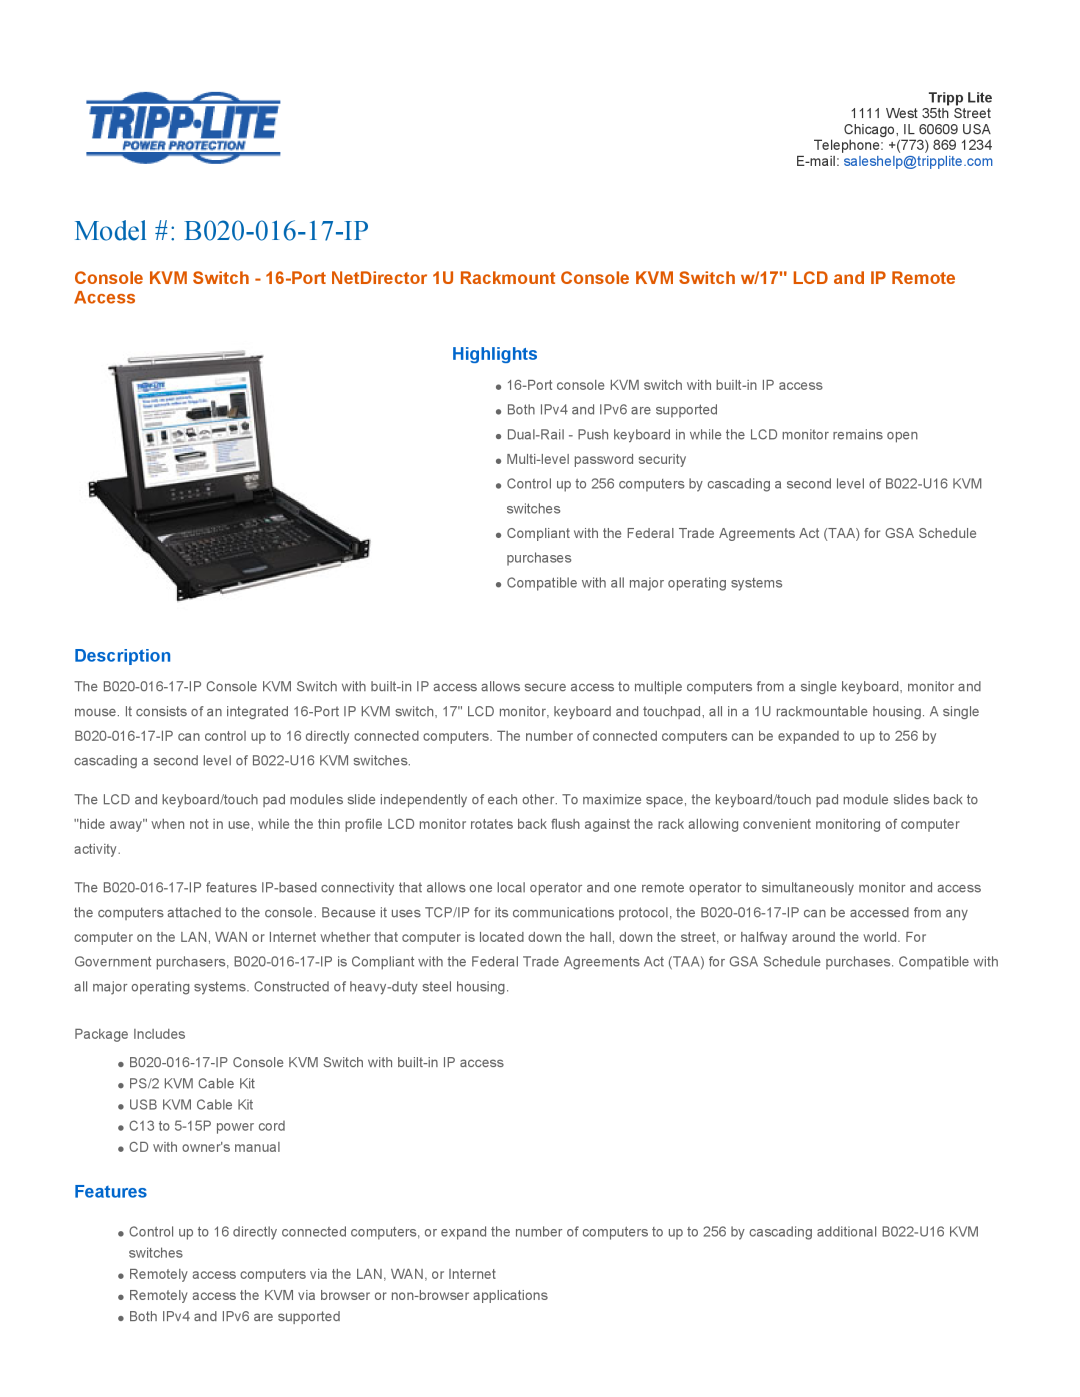 Tripp Lite owner manual Highlights, Description, Features, Model # B020-016-17-IP 